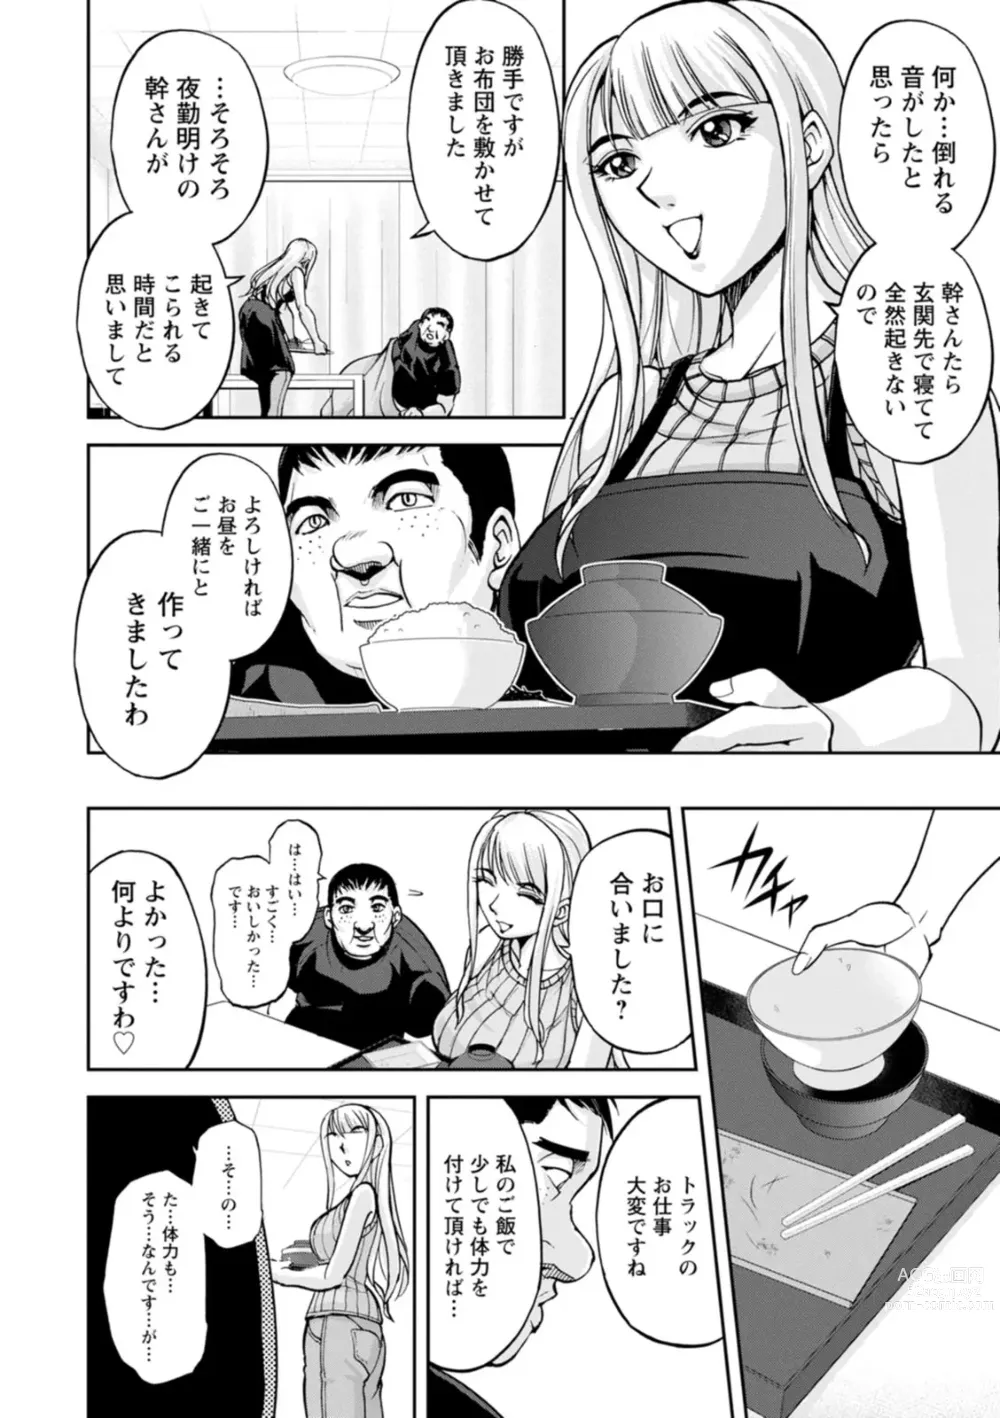 Page 6 of doujinshi Mr. Taitani from Corpo Harai